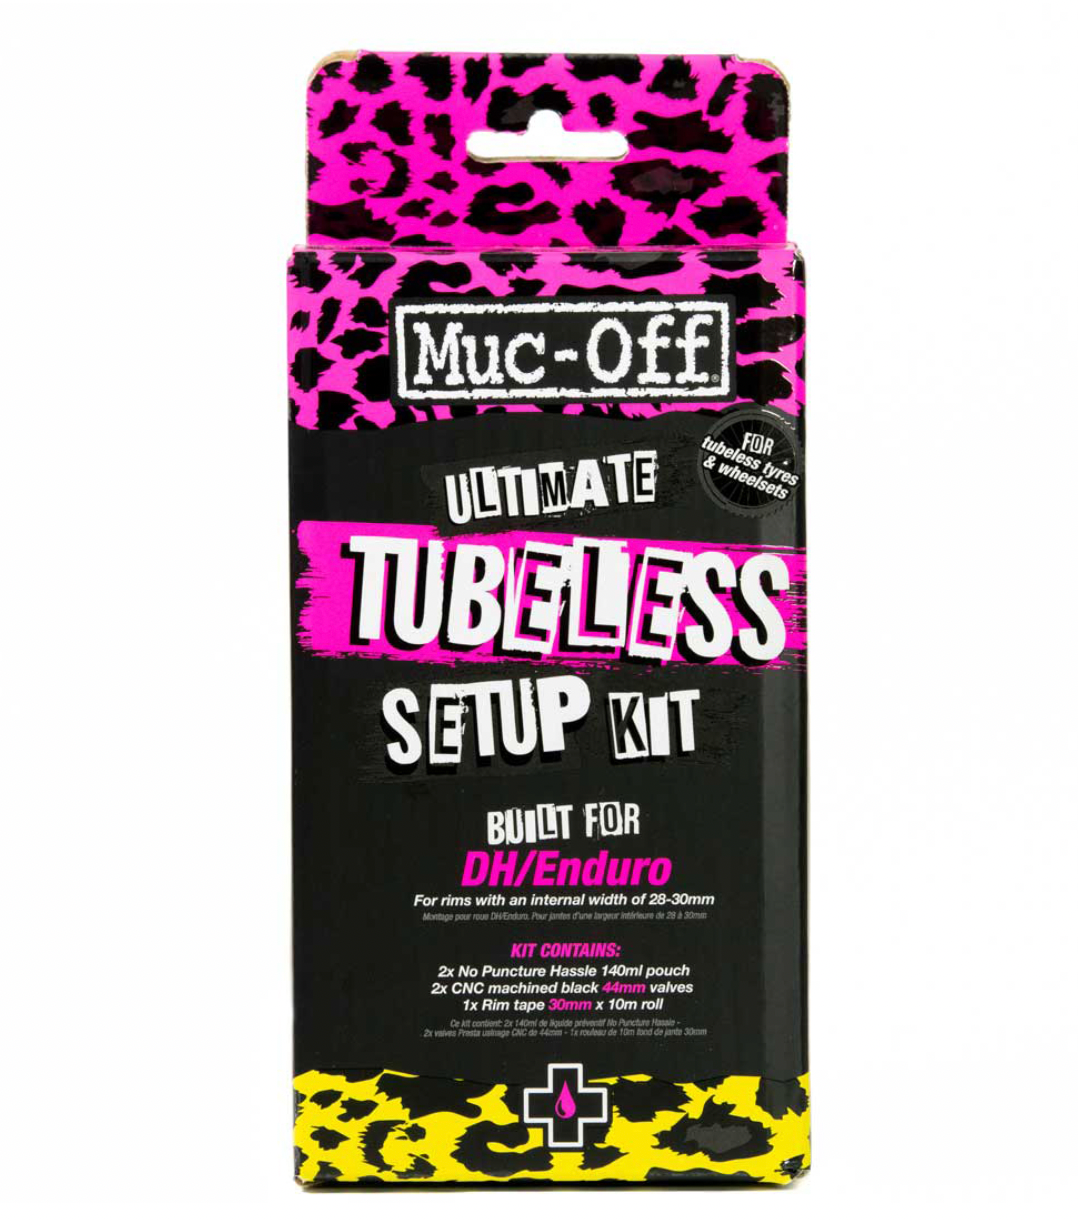 Muc-off Ultimate Tubeless Set-Up Kits